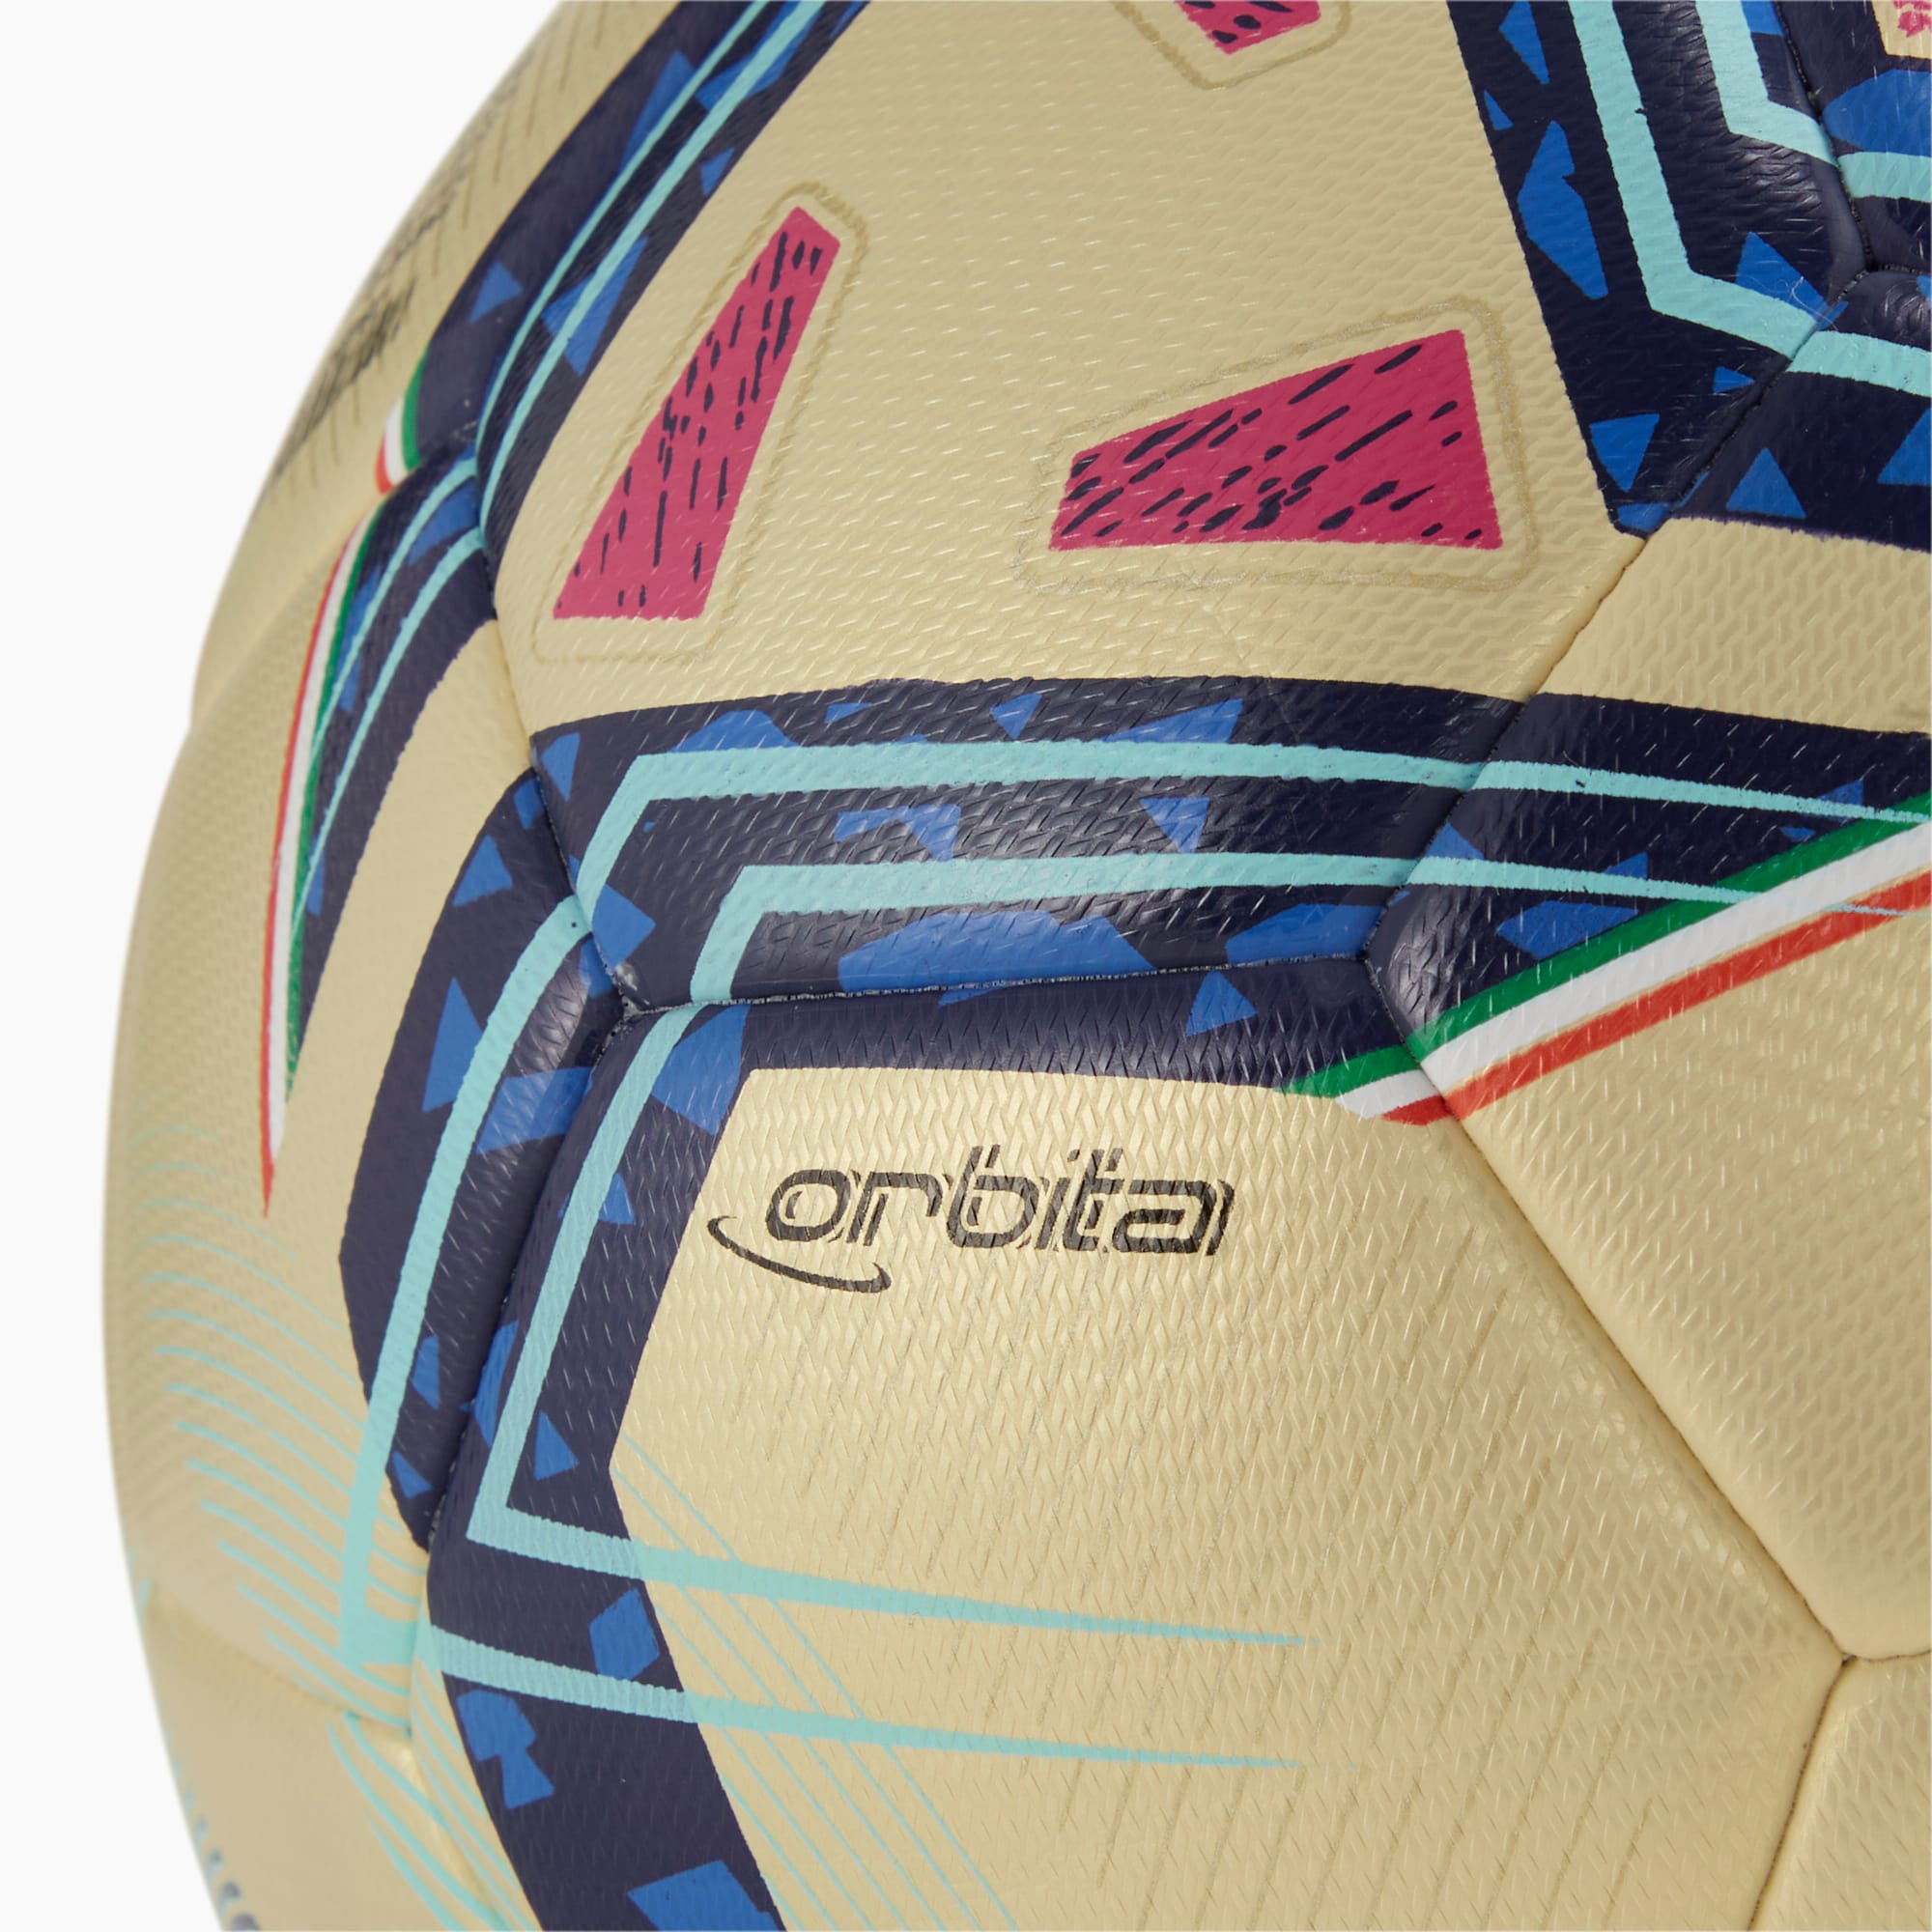 PUMA Serie A Special Edition Hybrid-Trainingsfußball, Gold/Blau, Größe: 3